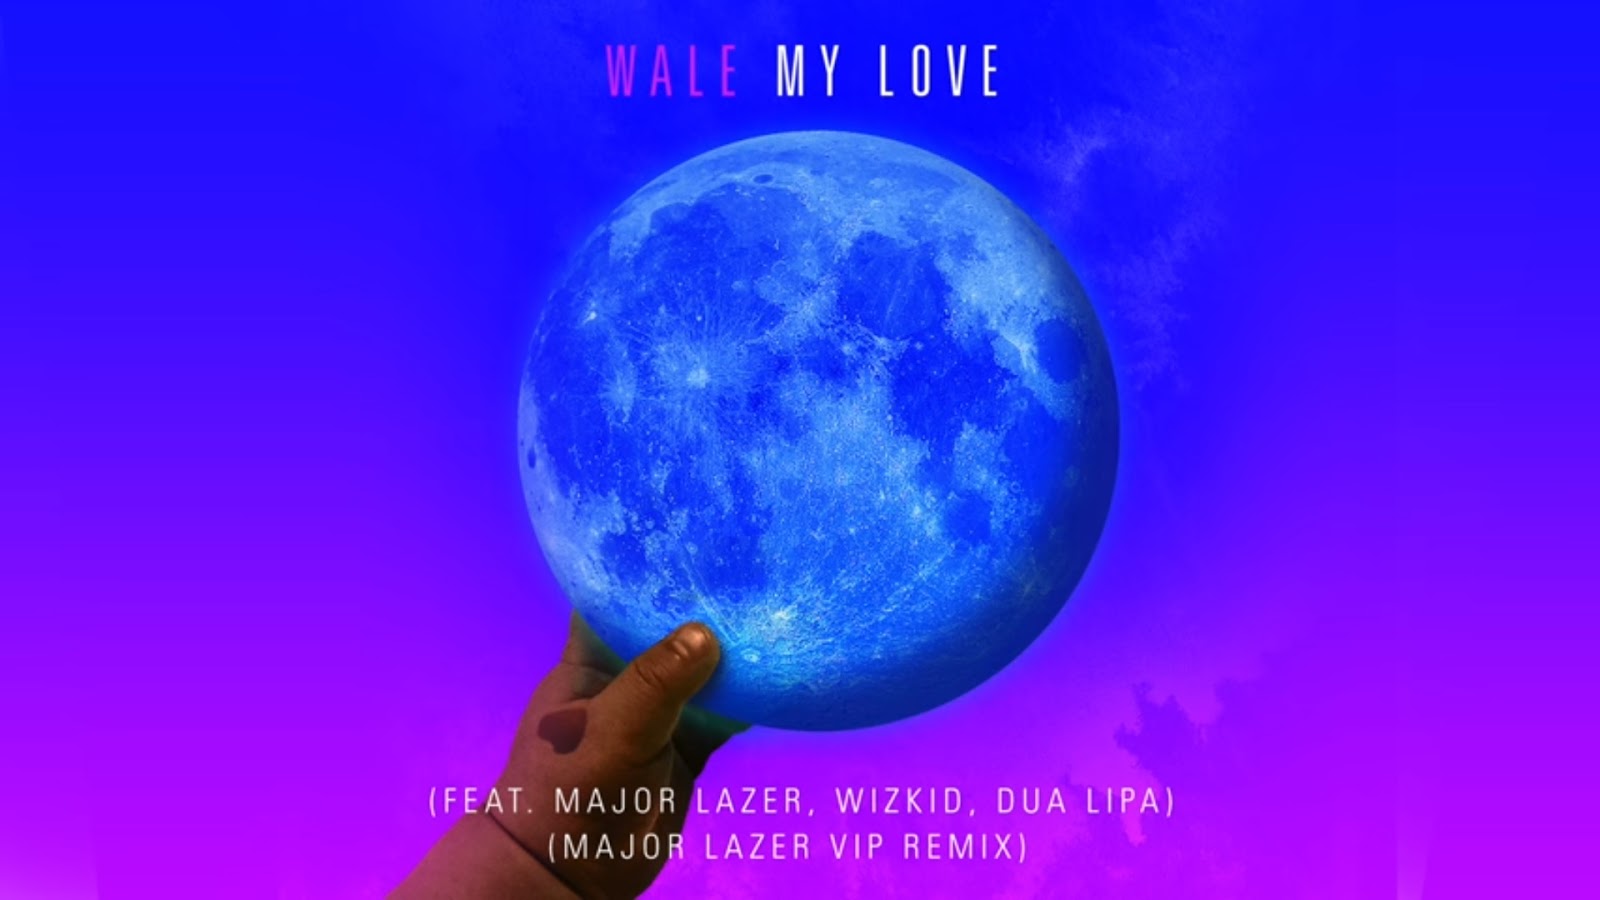 Major lazer remix. Wale Dua Lipa Major Lazer. My Love Major Lazer. Wizkid - my Love. Wizkid - Naughty Ride (feat. Major Lazer) Cover. Wizkid - my Love. Wizkid - Naughty Ride (feat. Major Lazer).